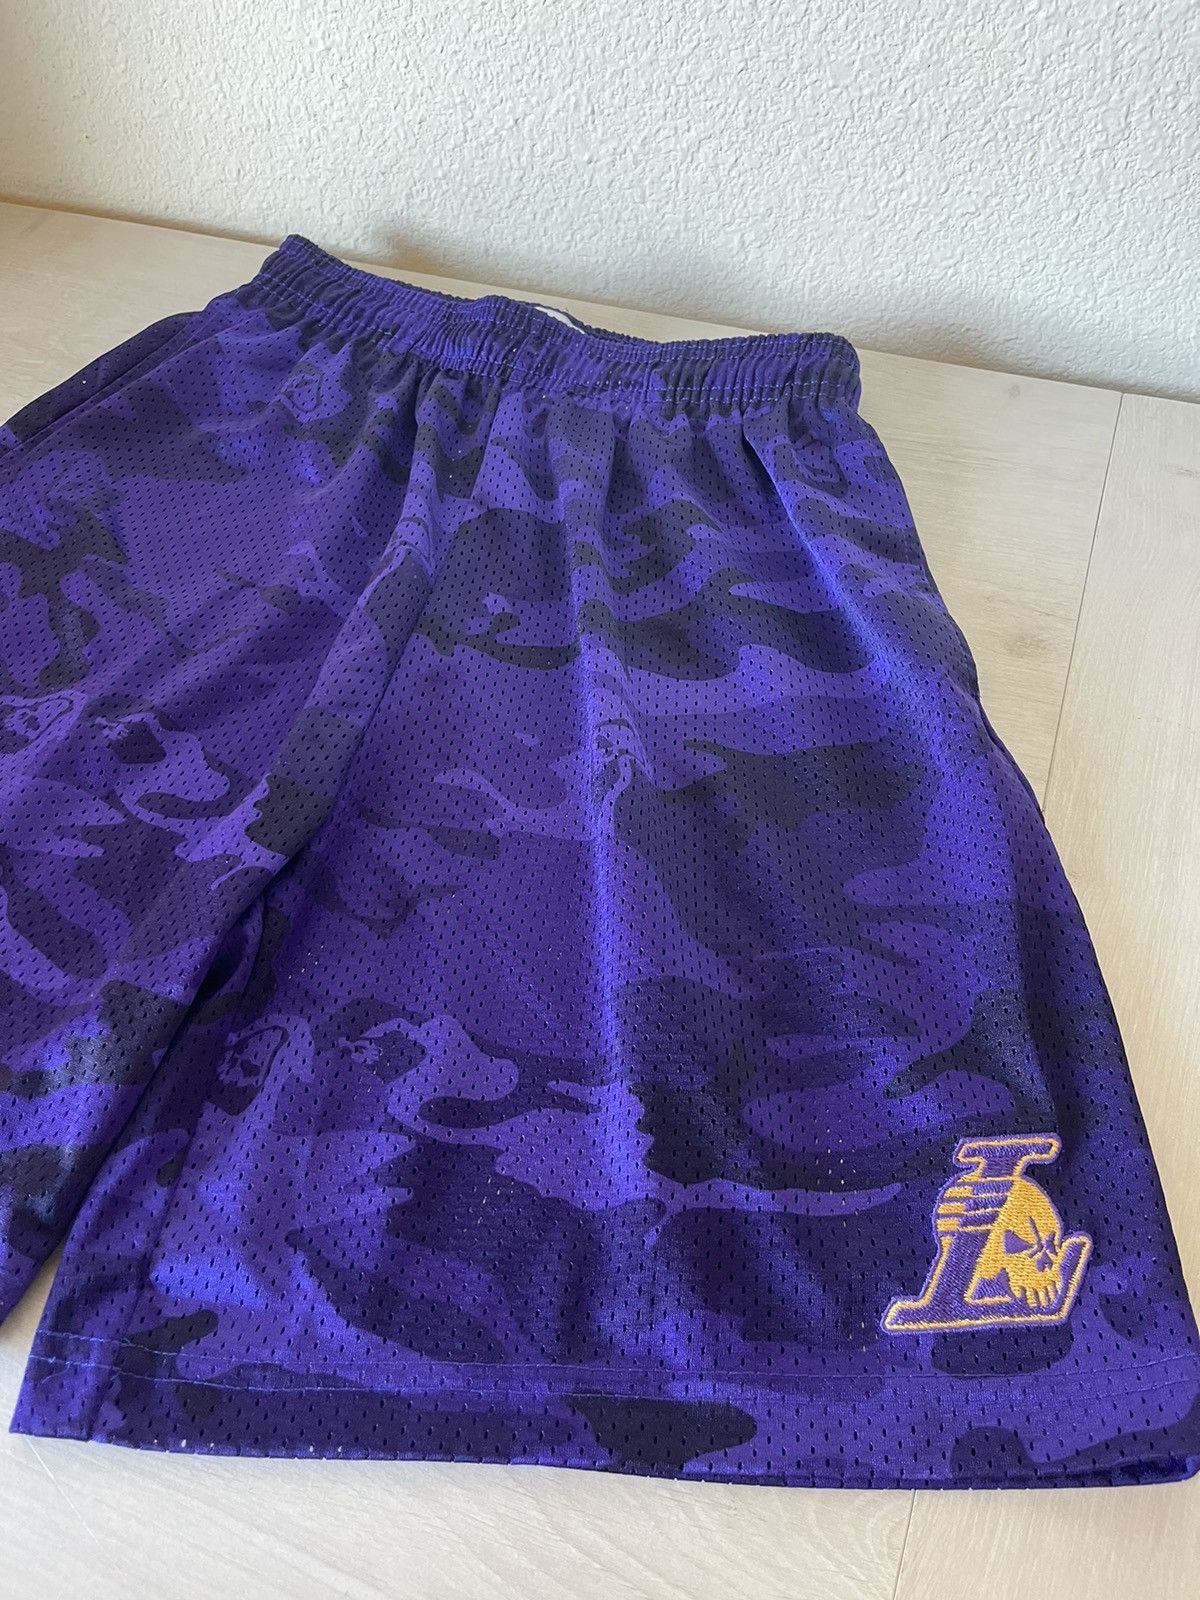 Warren Lotas Warren Lotas x LA Lakers Purple Camo Mesh Shorts-Size